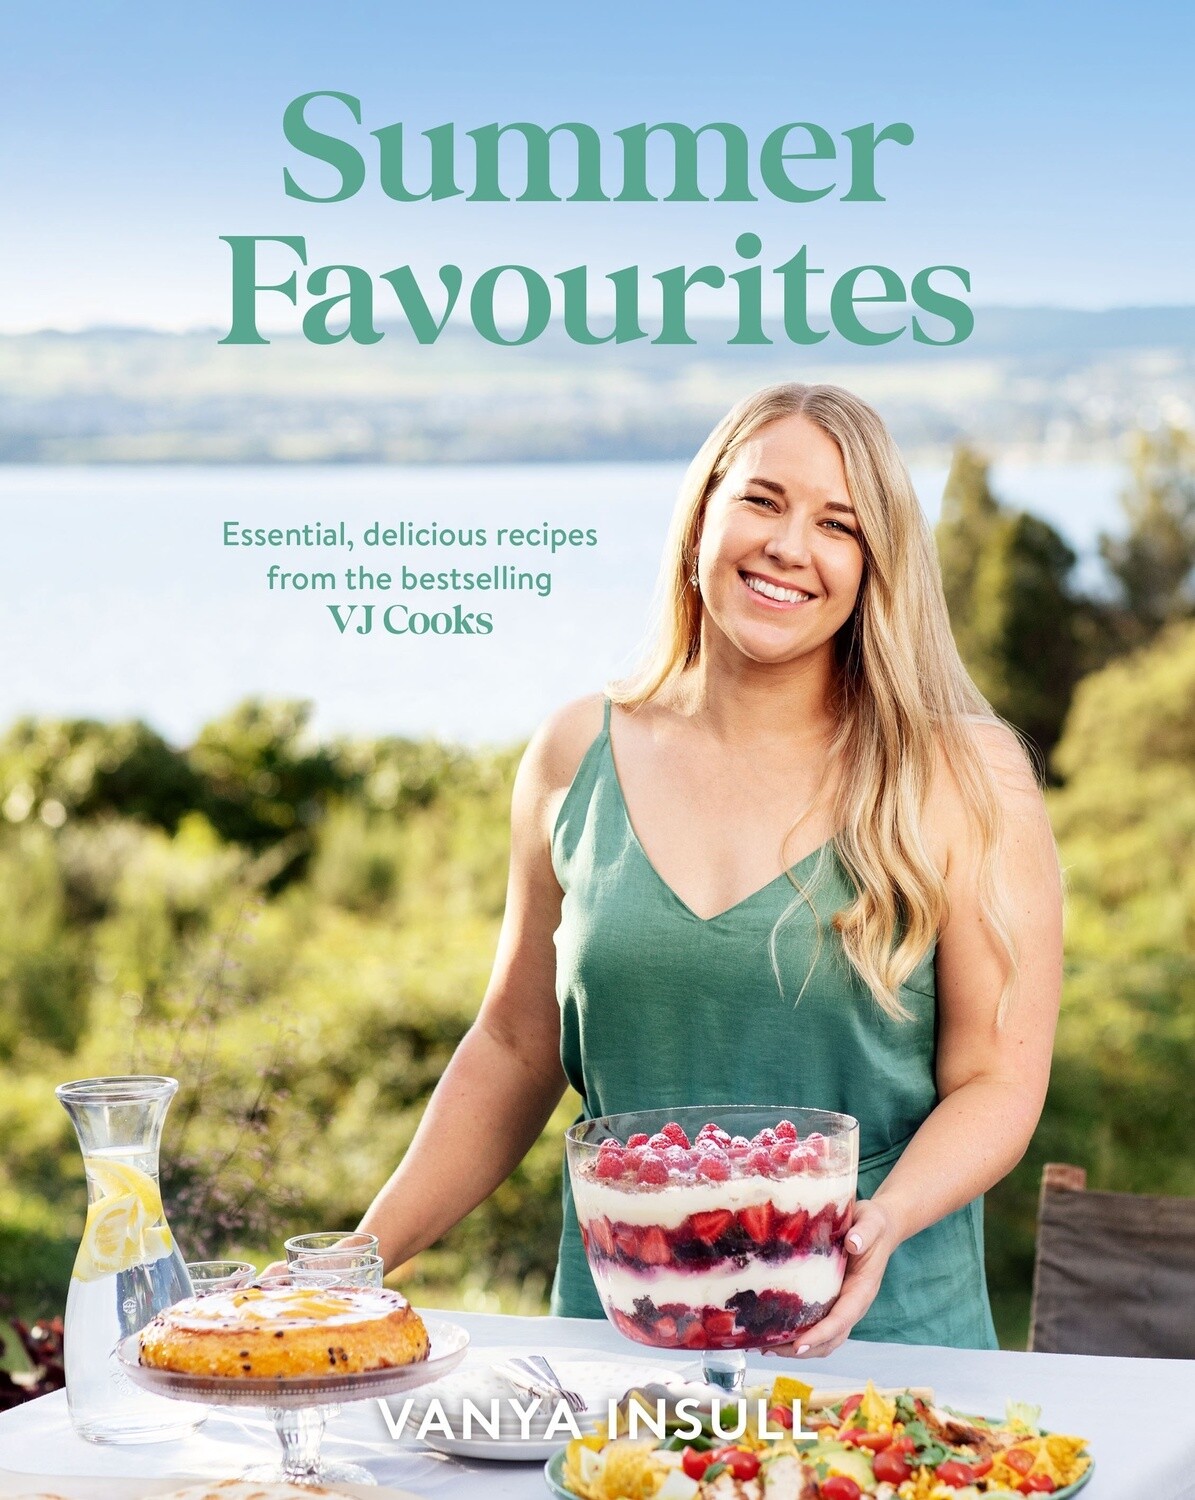 Summer Favourites by Vanya Insull